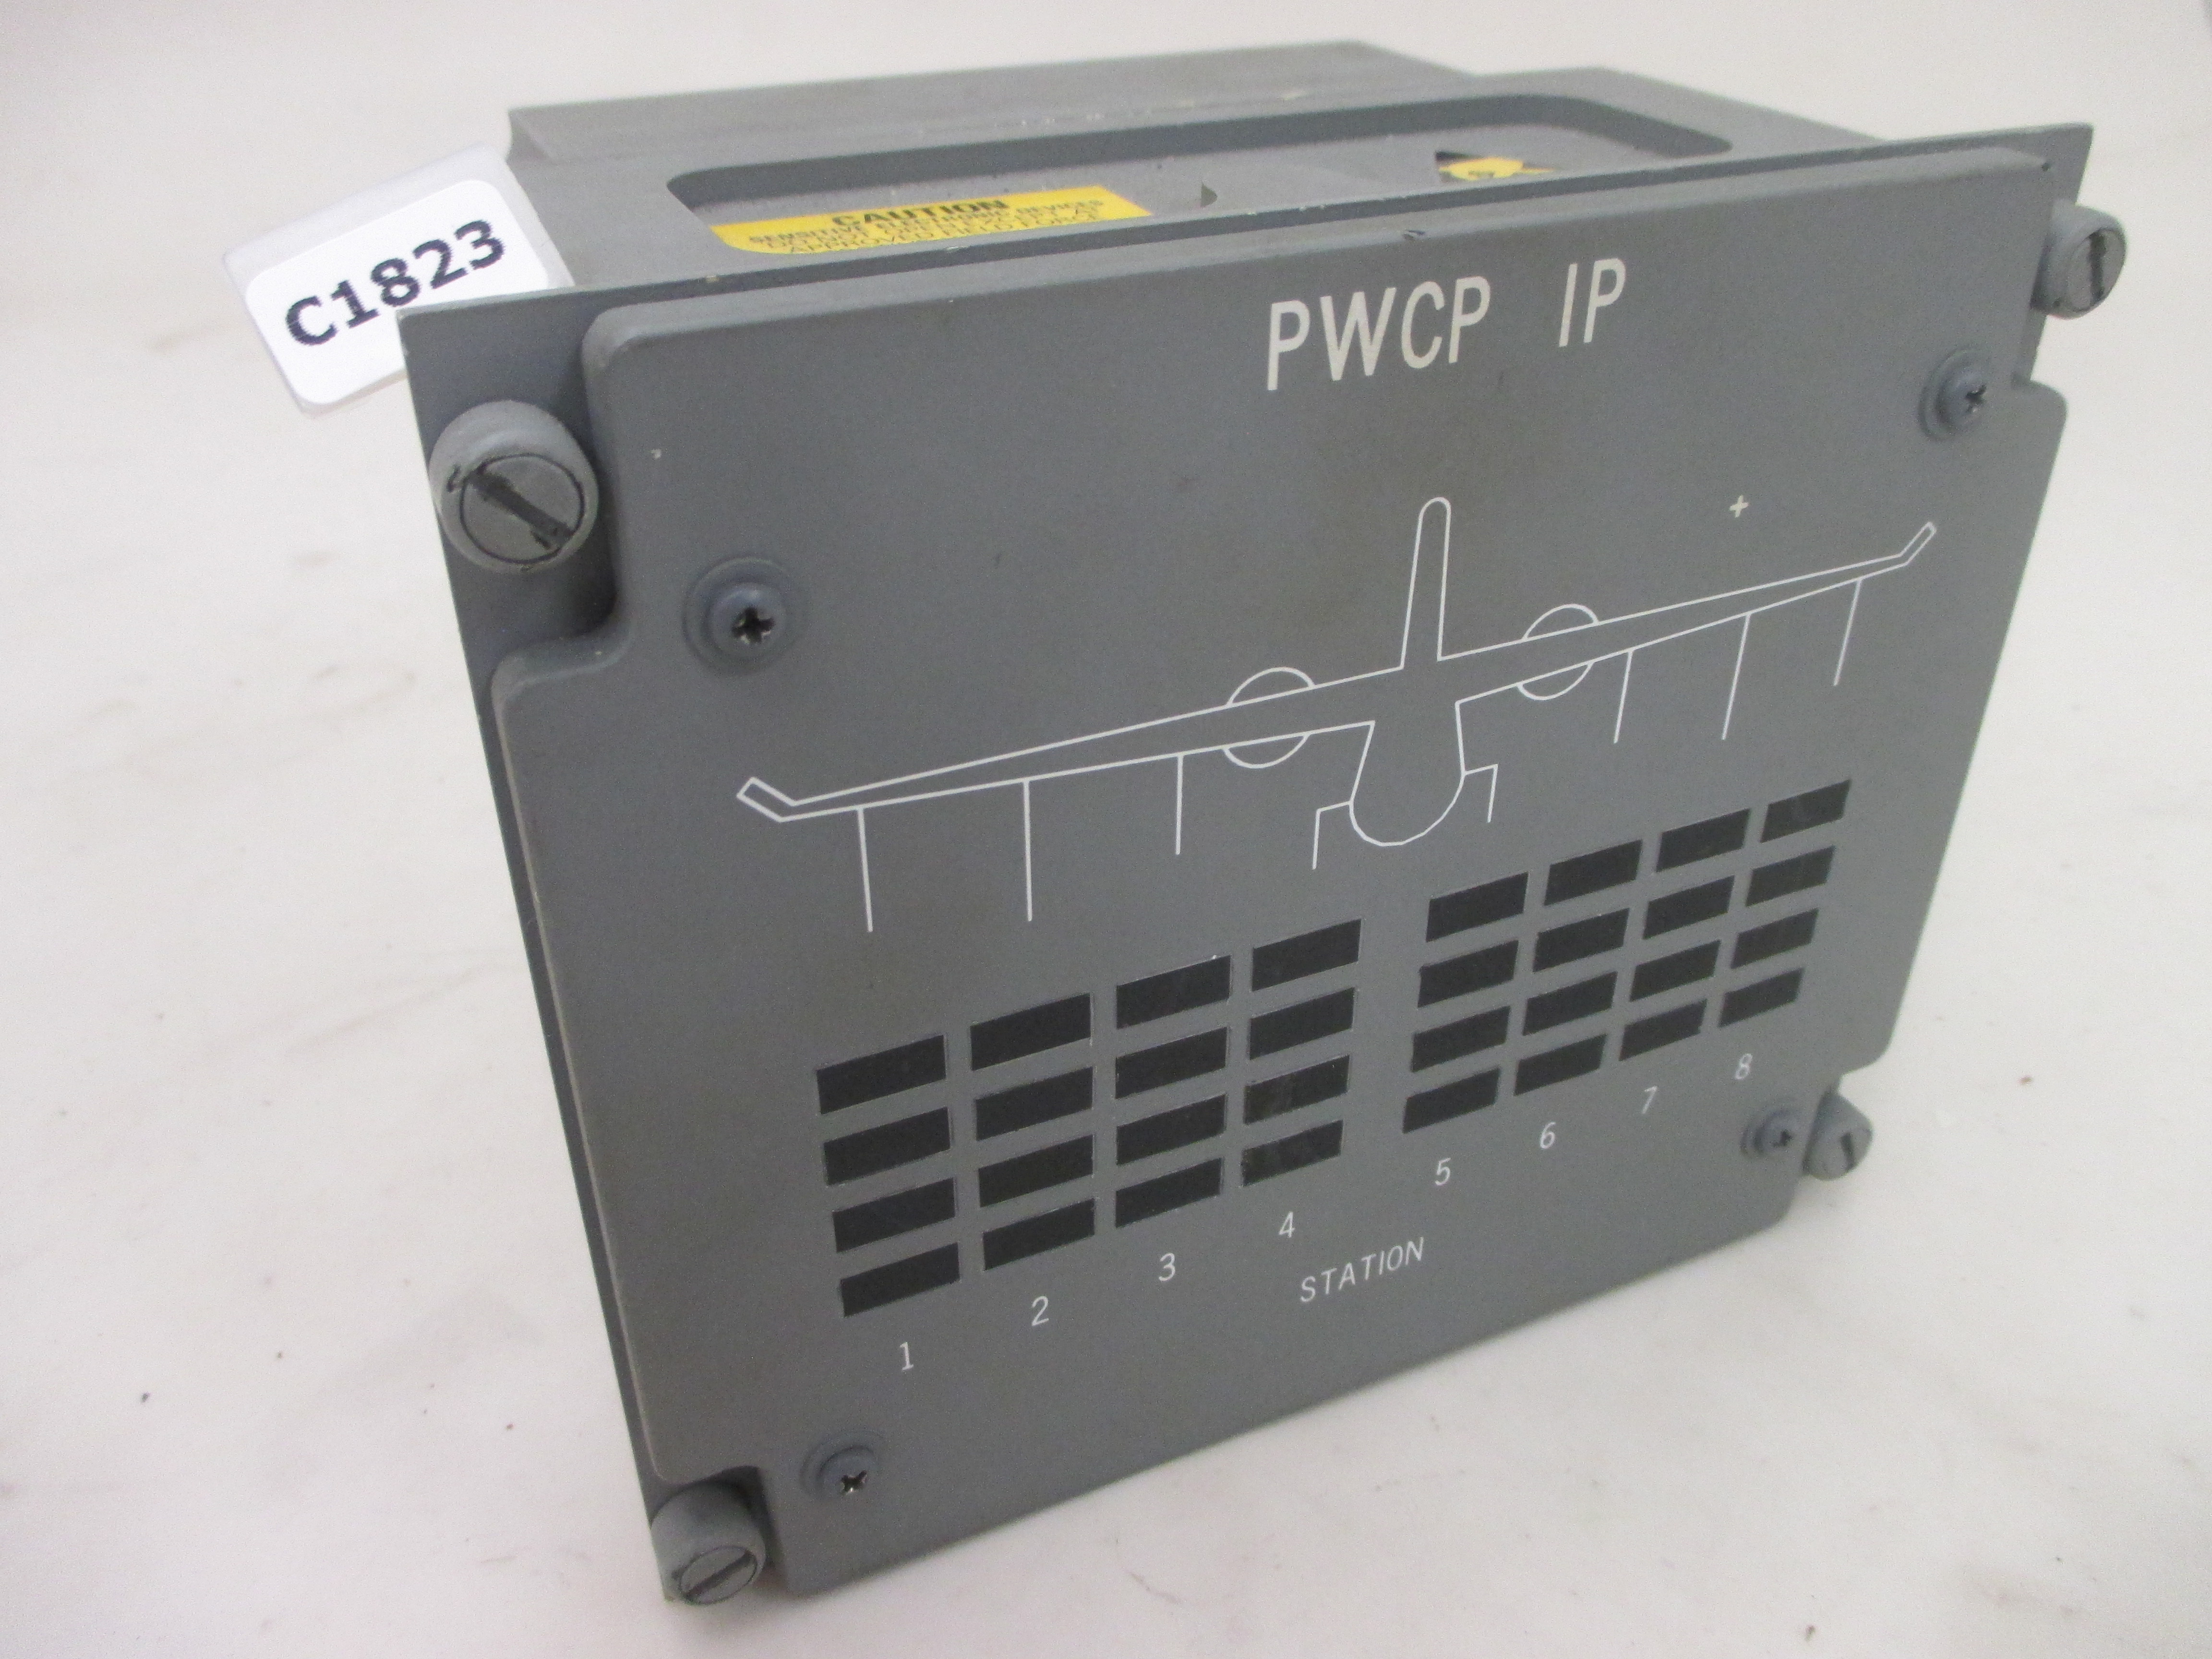 PWCP  IP  (Pilots Weapon Control Panel)